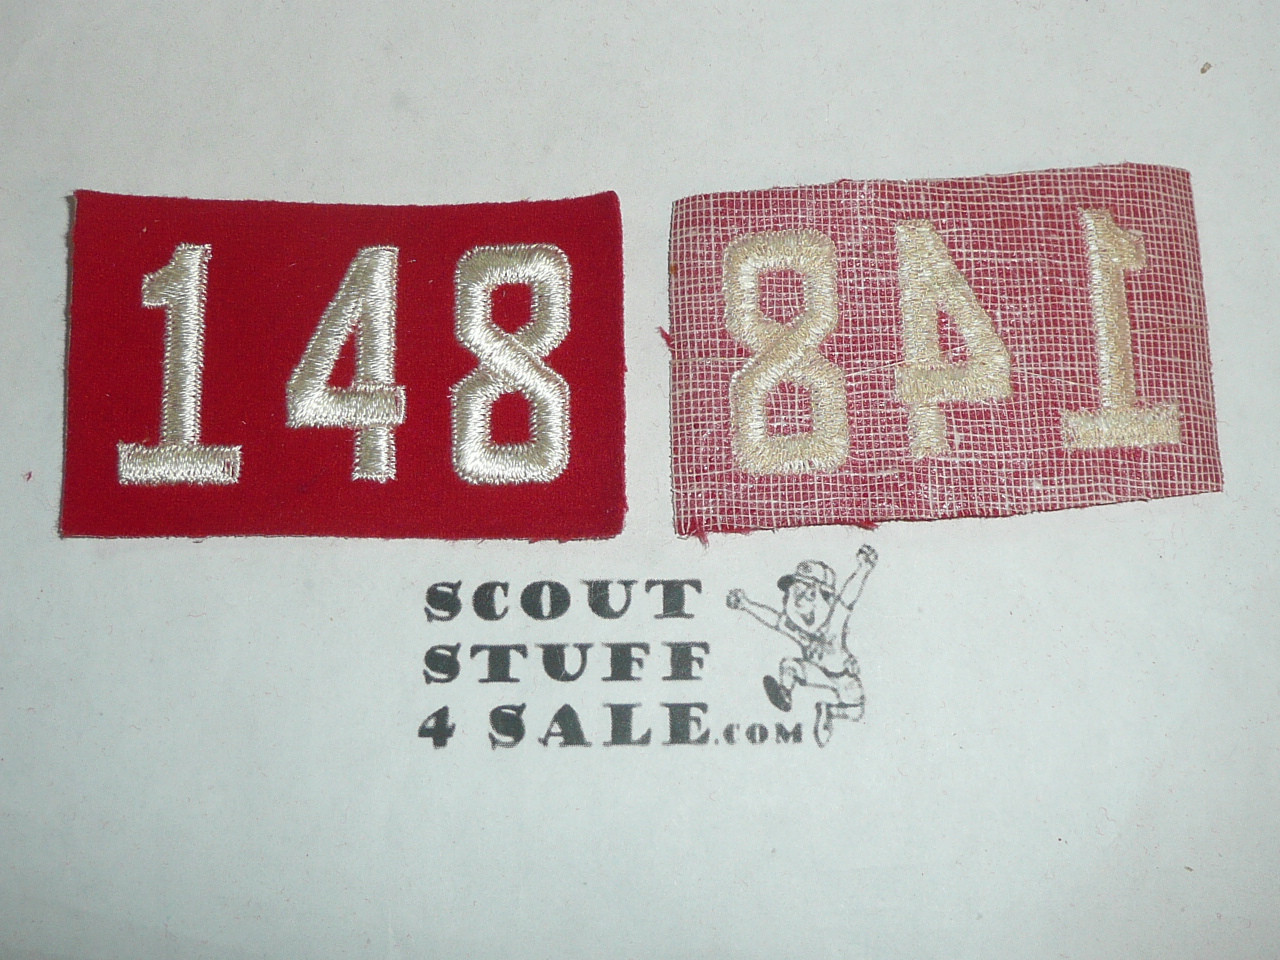 1940's Red Troop Numeral "148", felt, gauze back, Unused